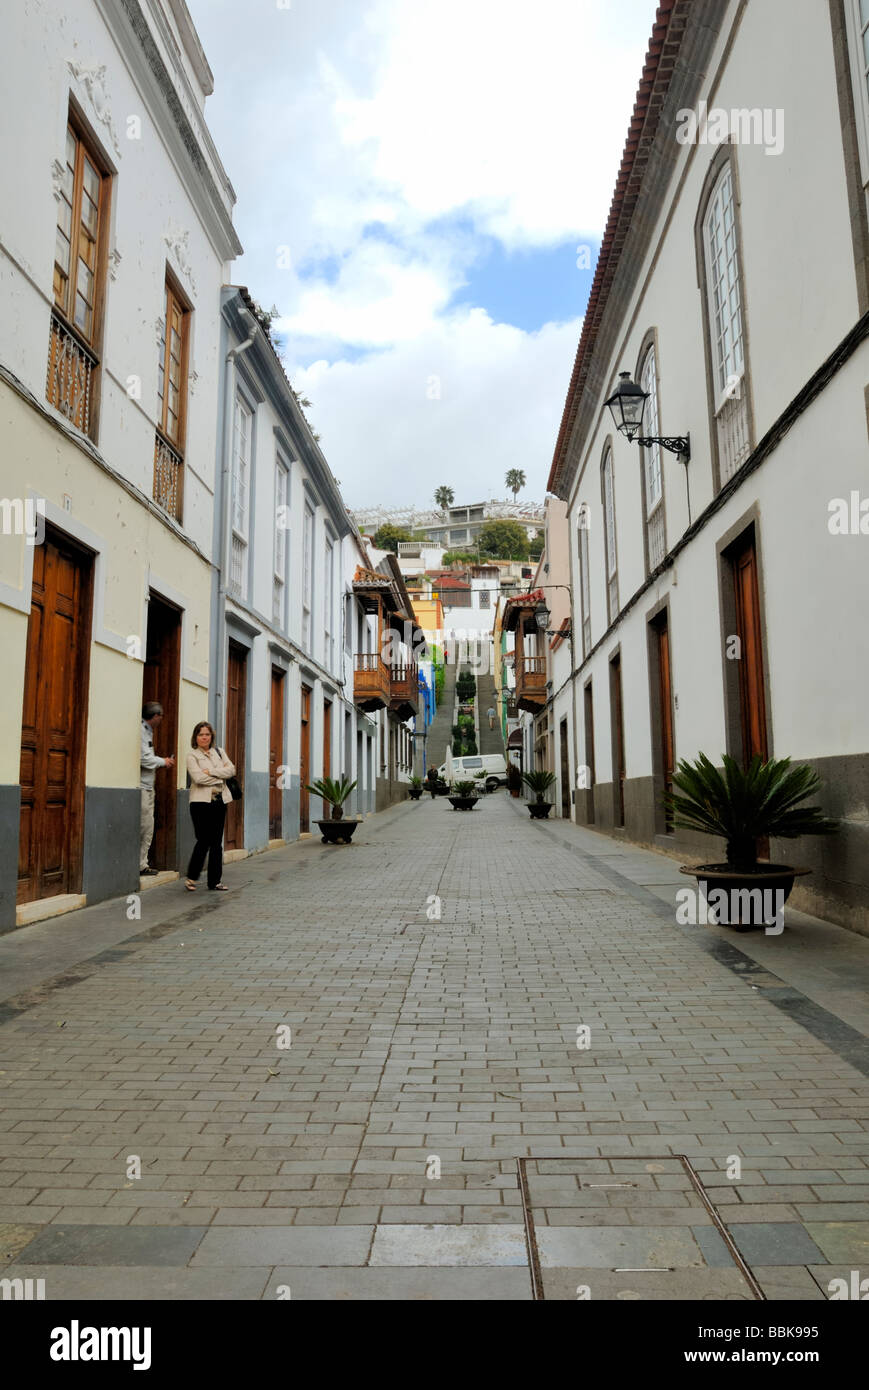 A fine view along Calle de la Diputacion. Teror, Gran Canaria, Canary Islands, Spain, Europe. Stock Photo